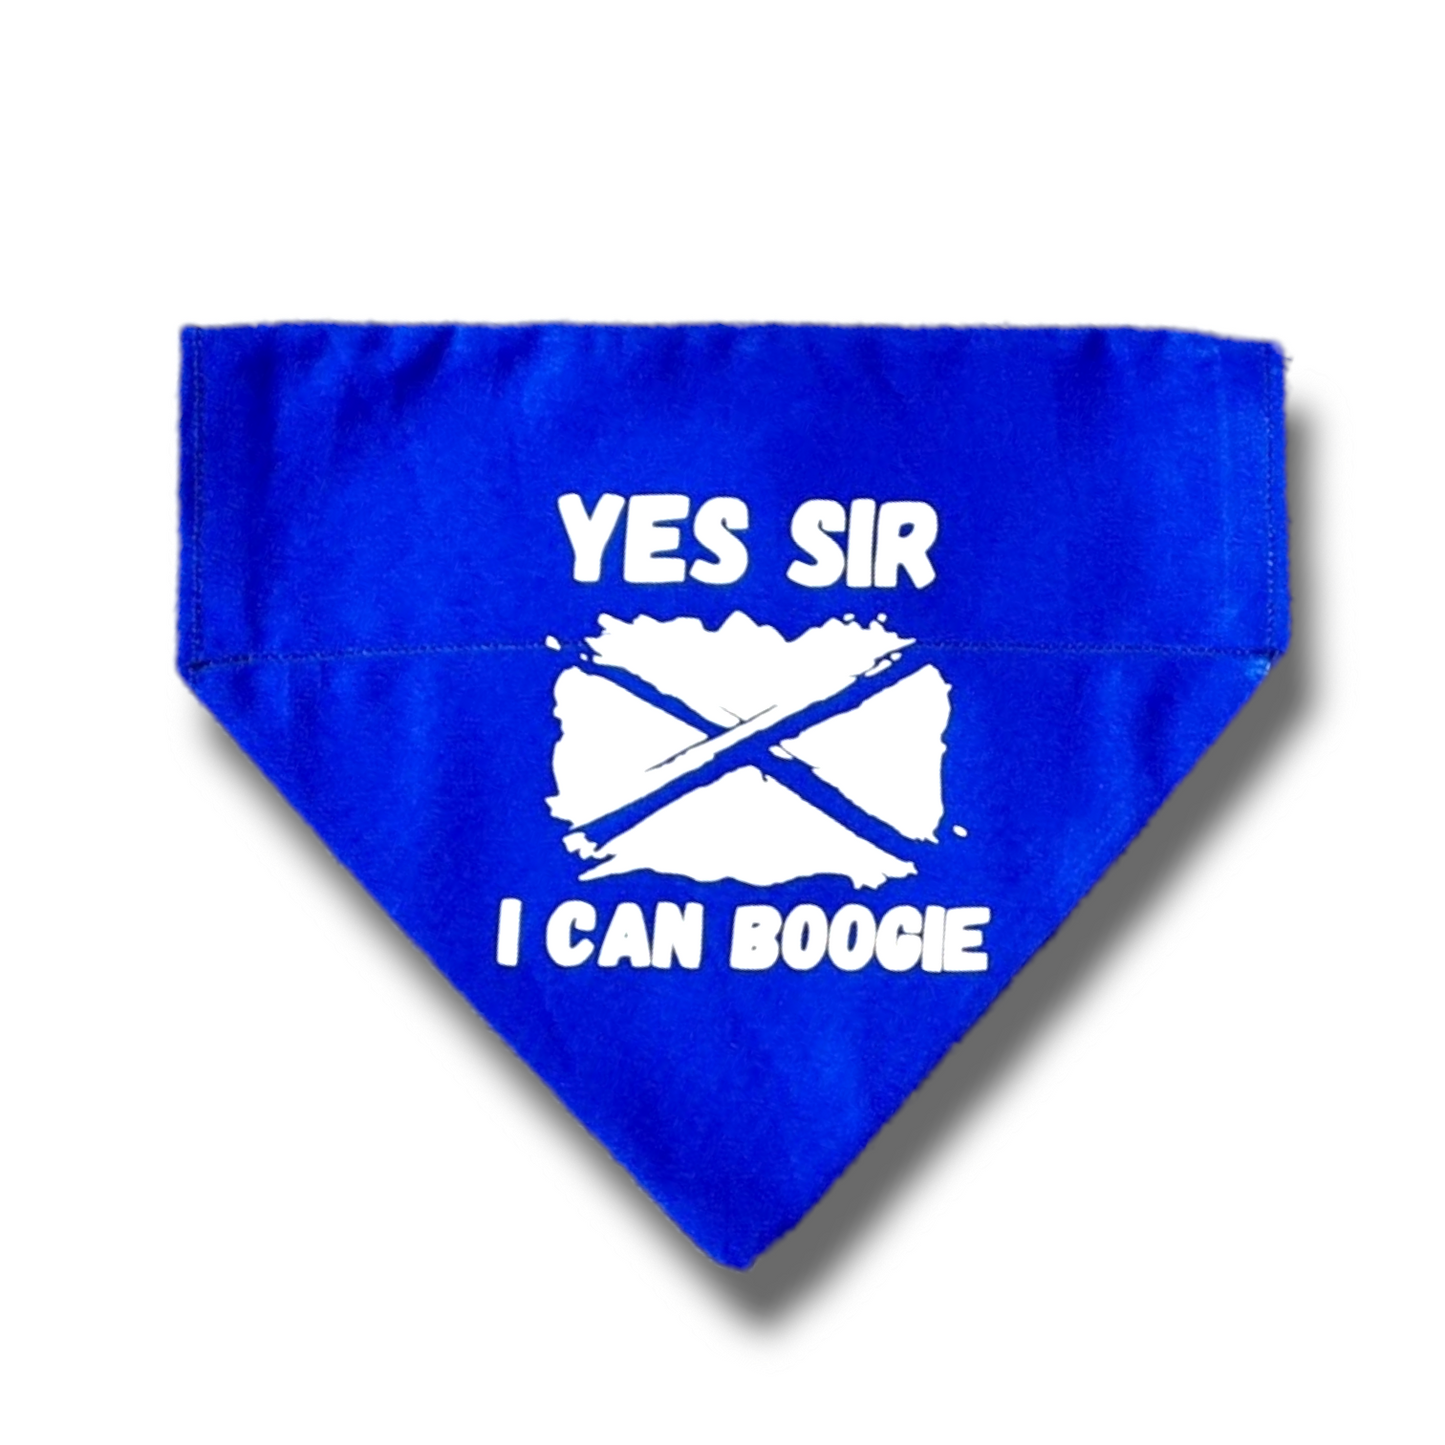 ‘Yes sir I can boogie’ dog bandana